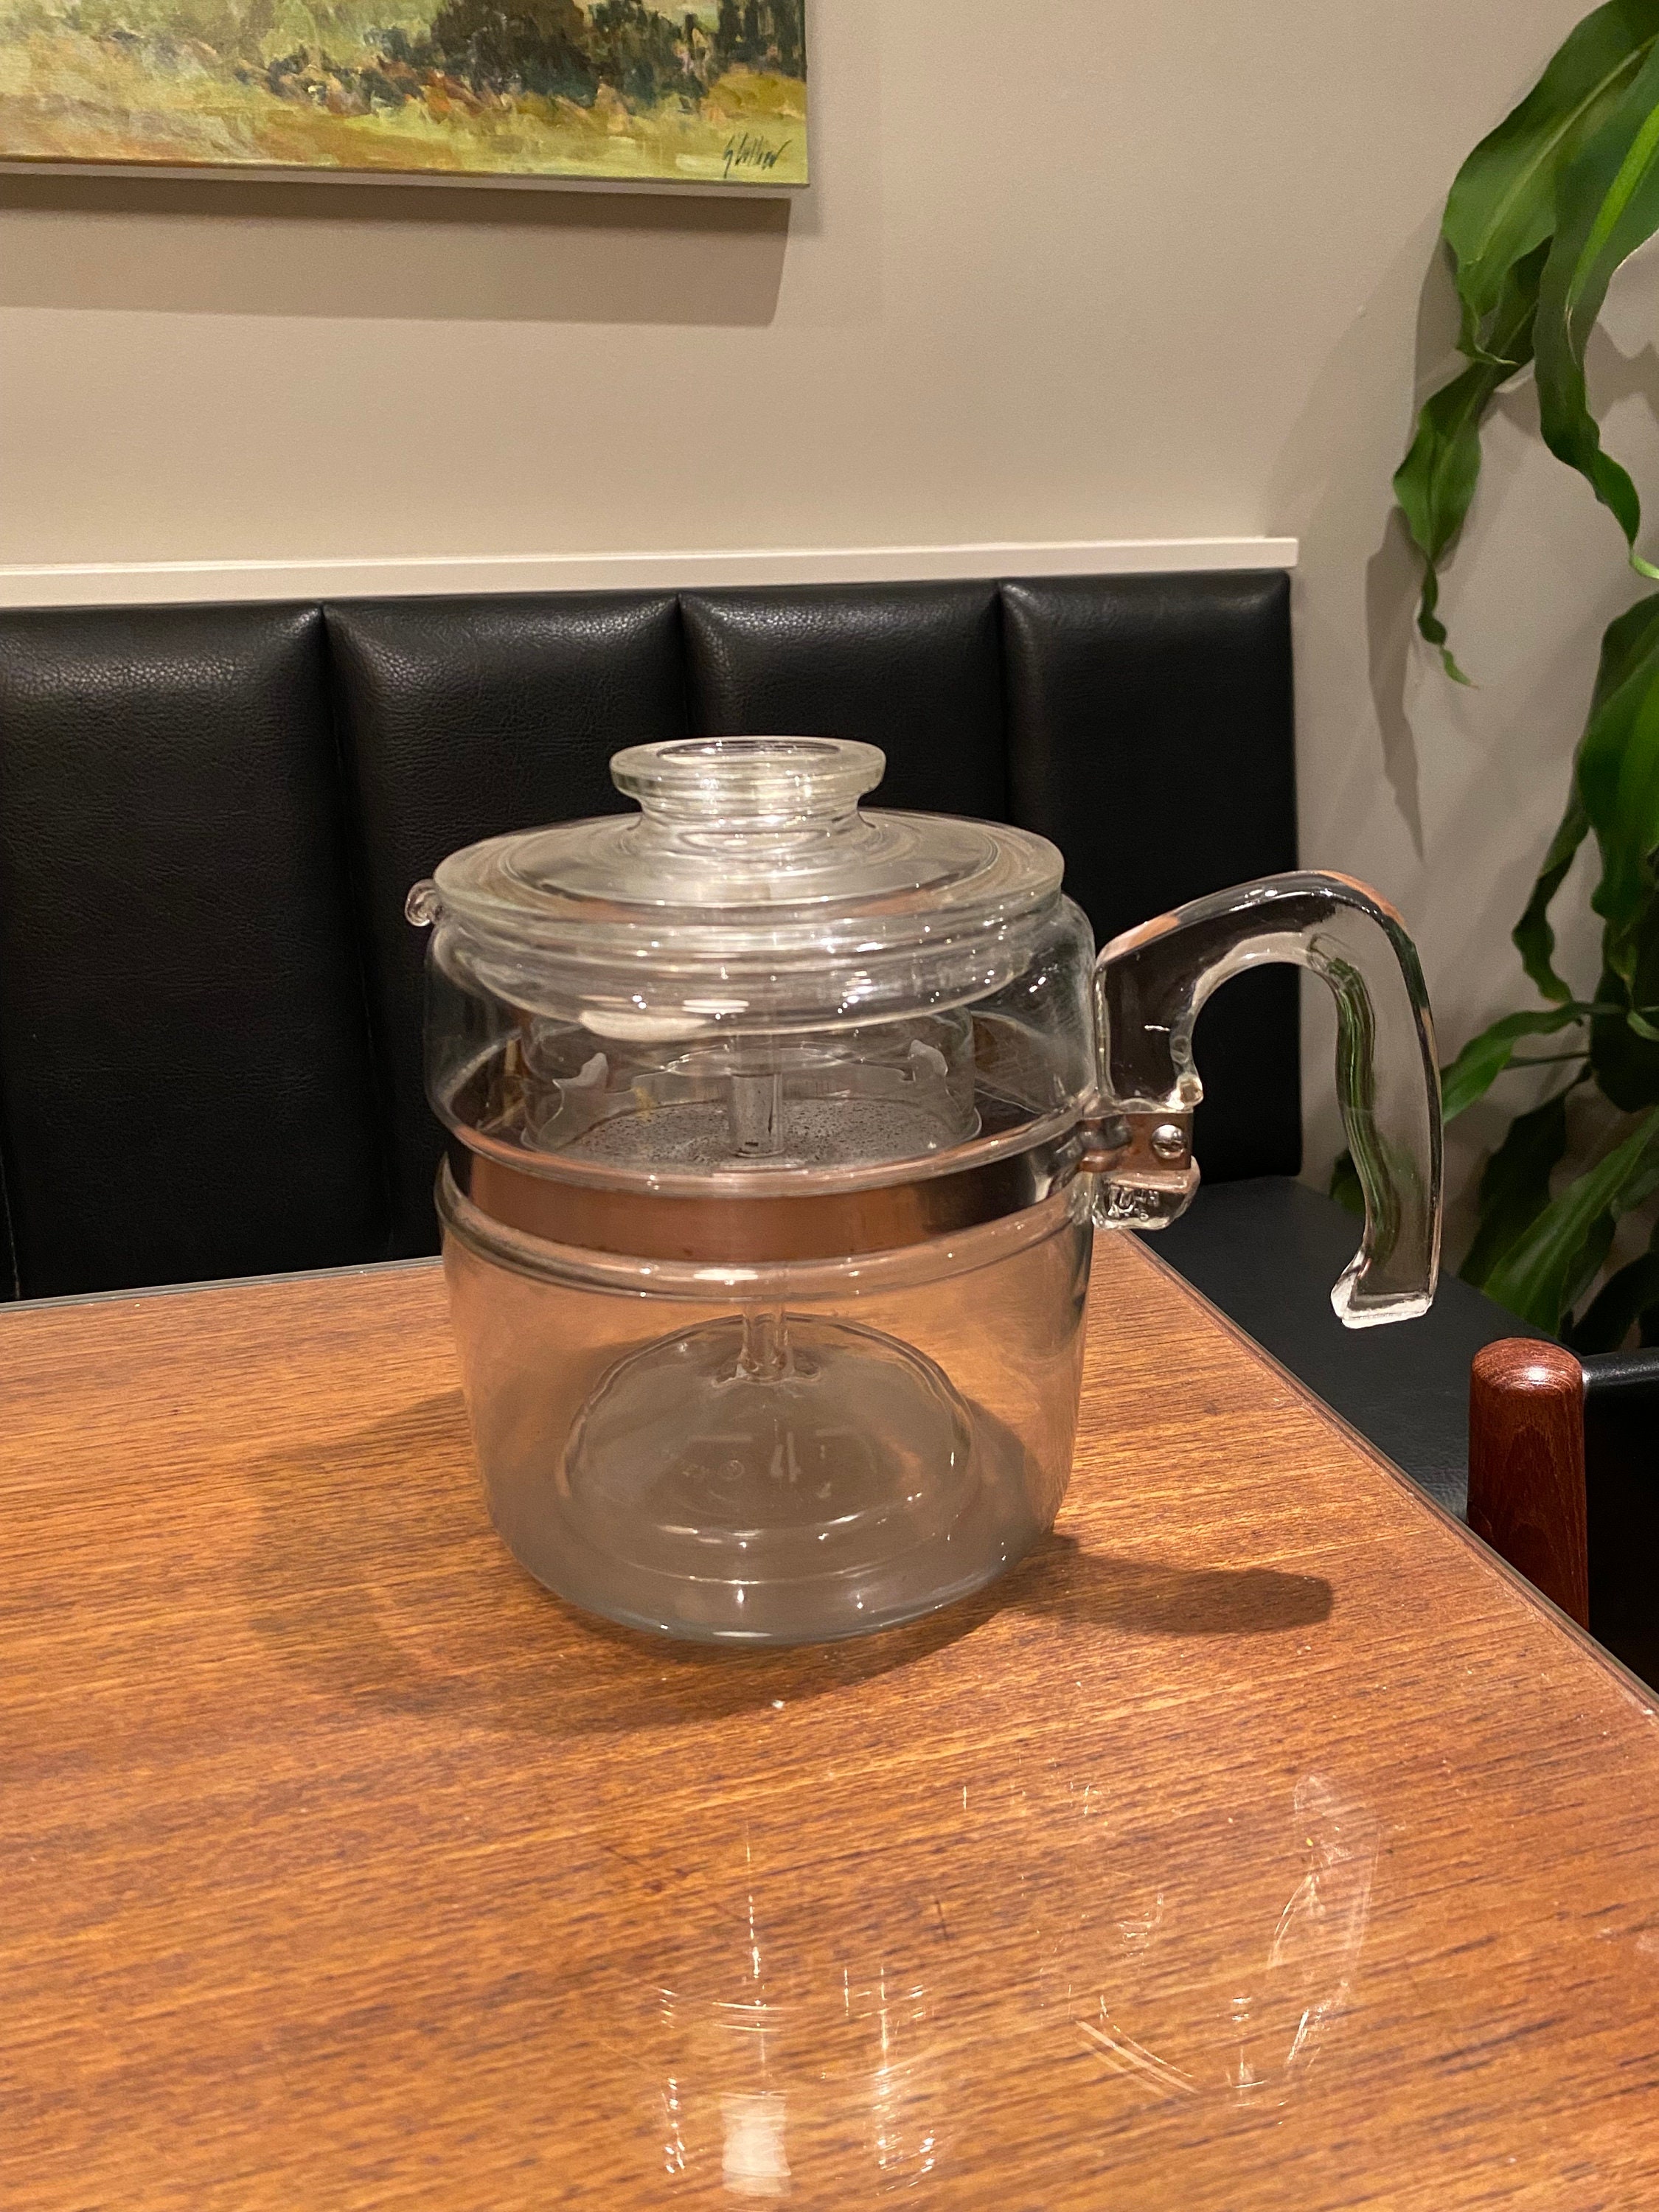 Vintage PYREX Flameware 6 Cup Glass Coffee Pot Percolator 7756 